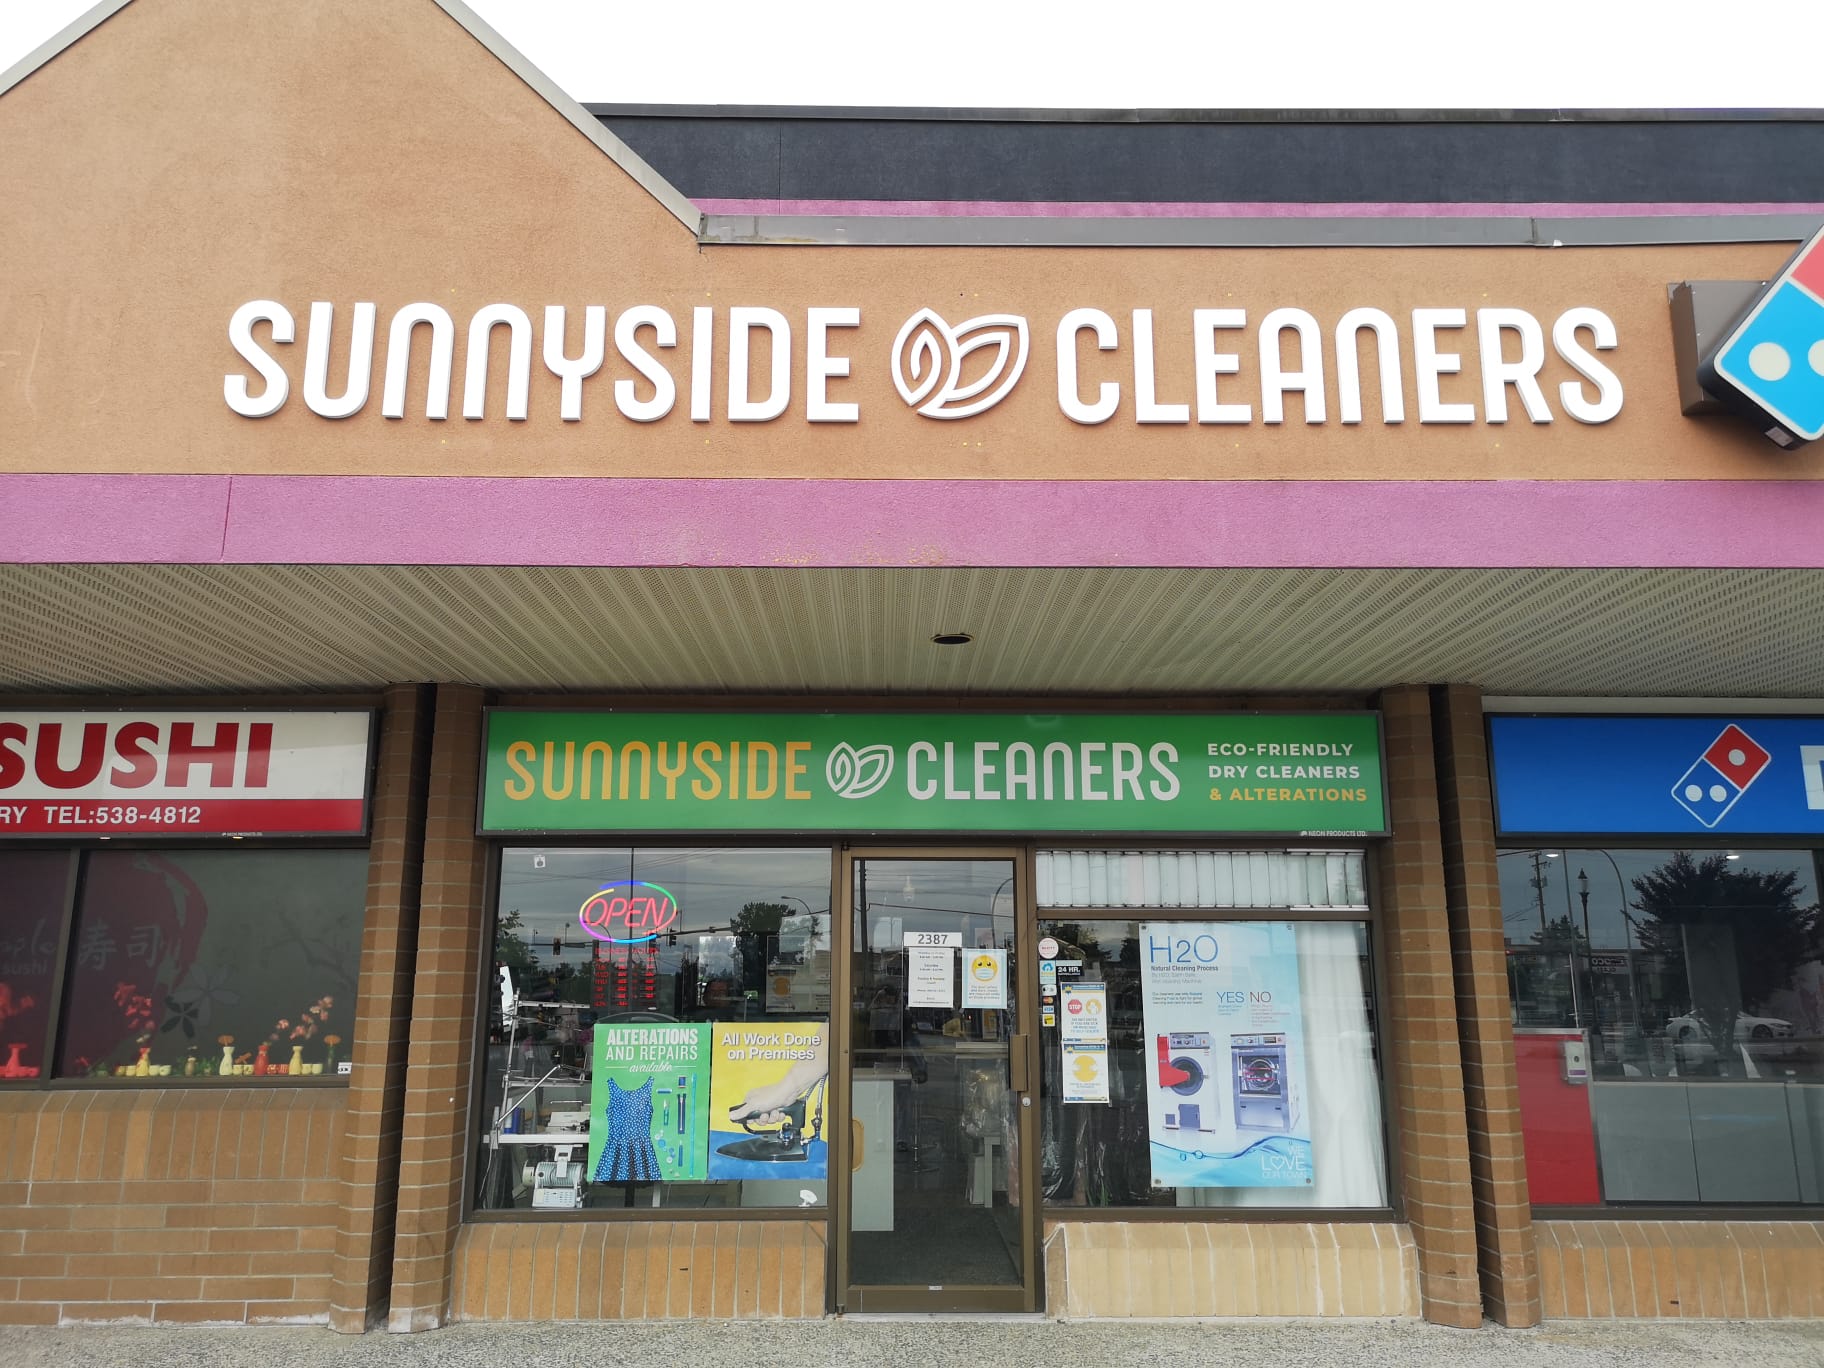 Sunnyside Cleaners